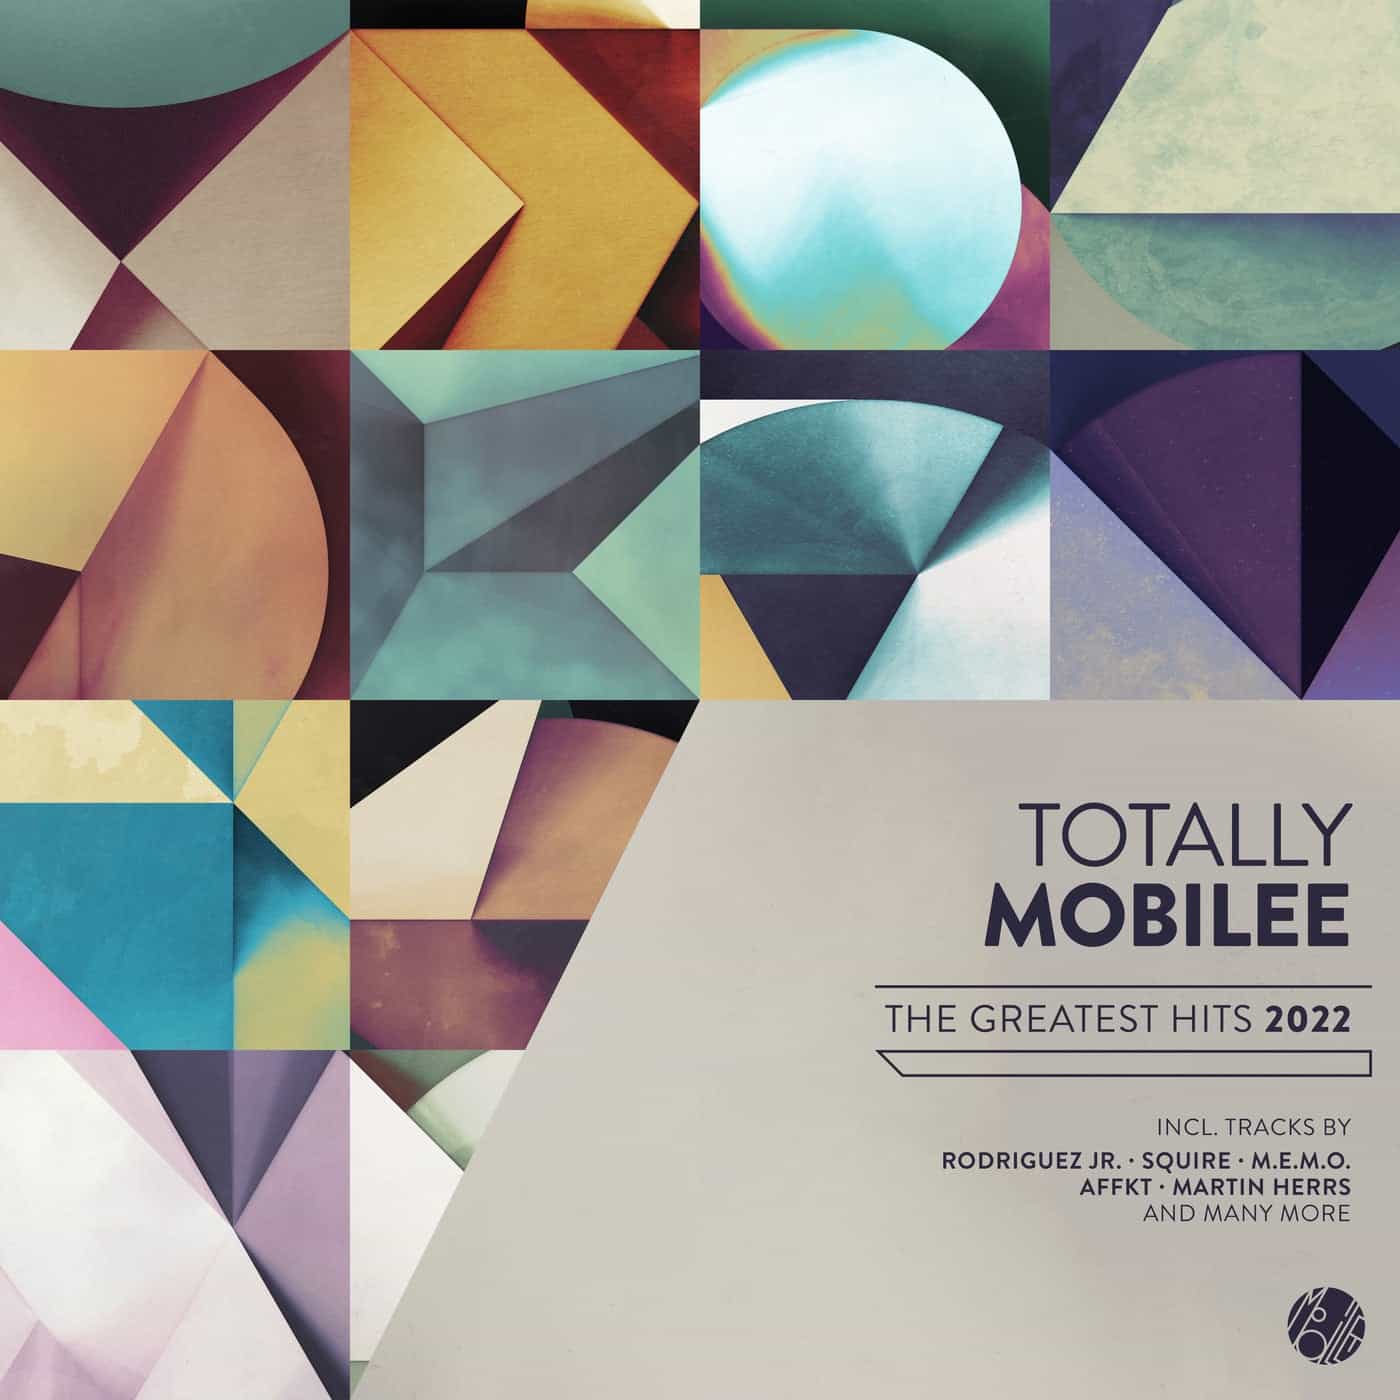 image cover: VA - Totally Mobilee - Greatest Hits 2022 / MOBILEECD039BP